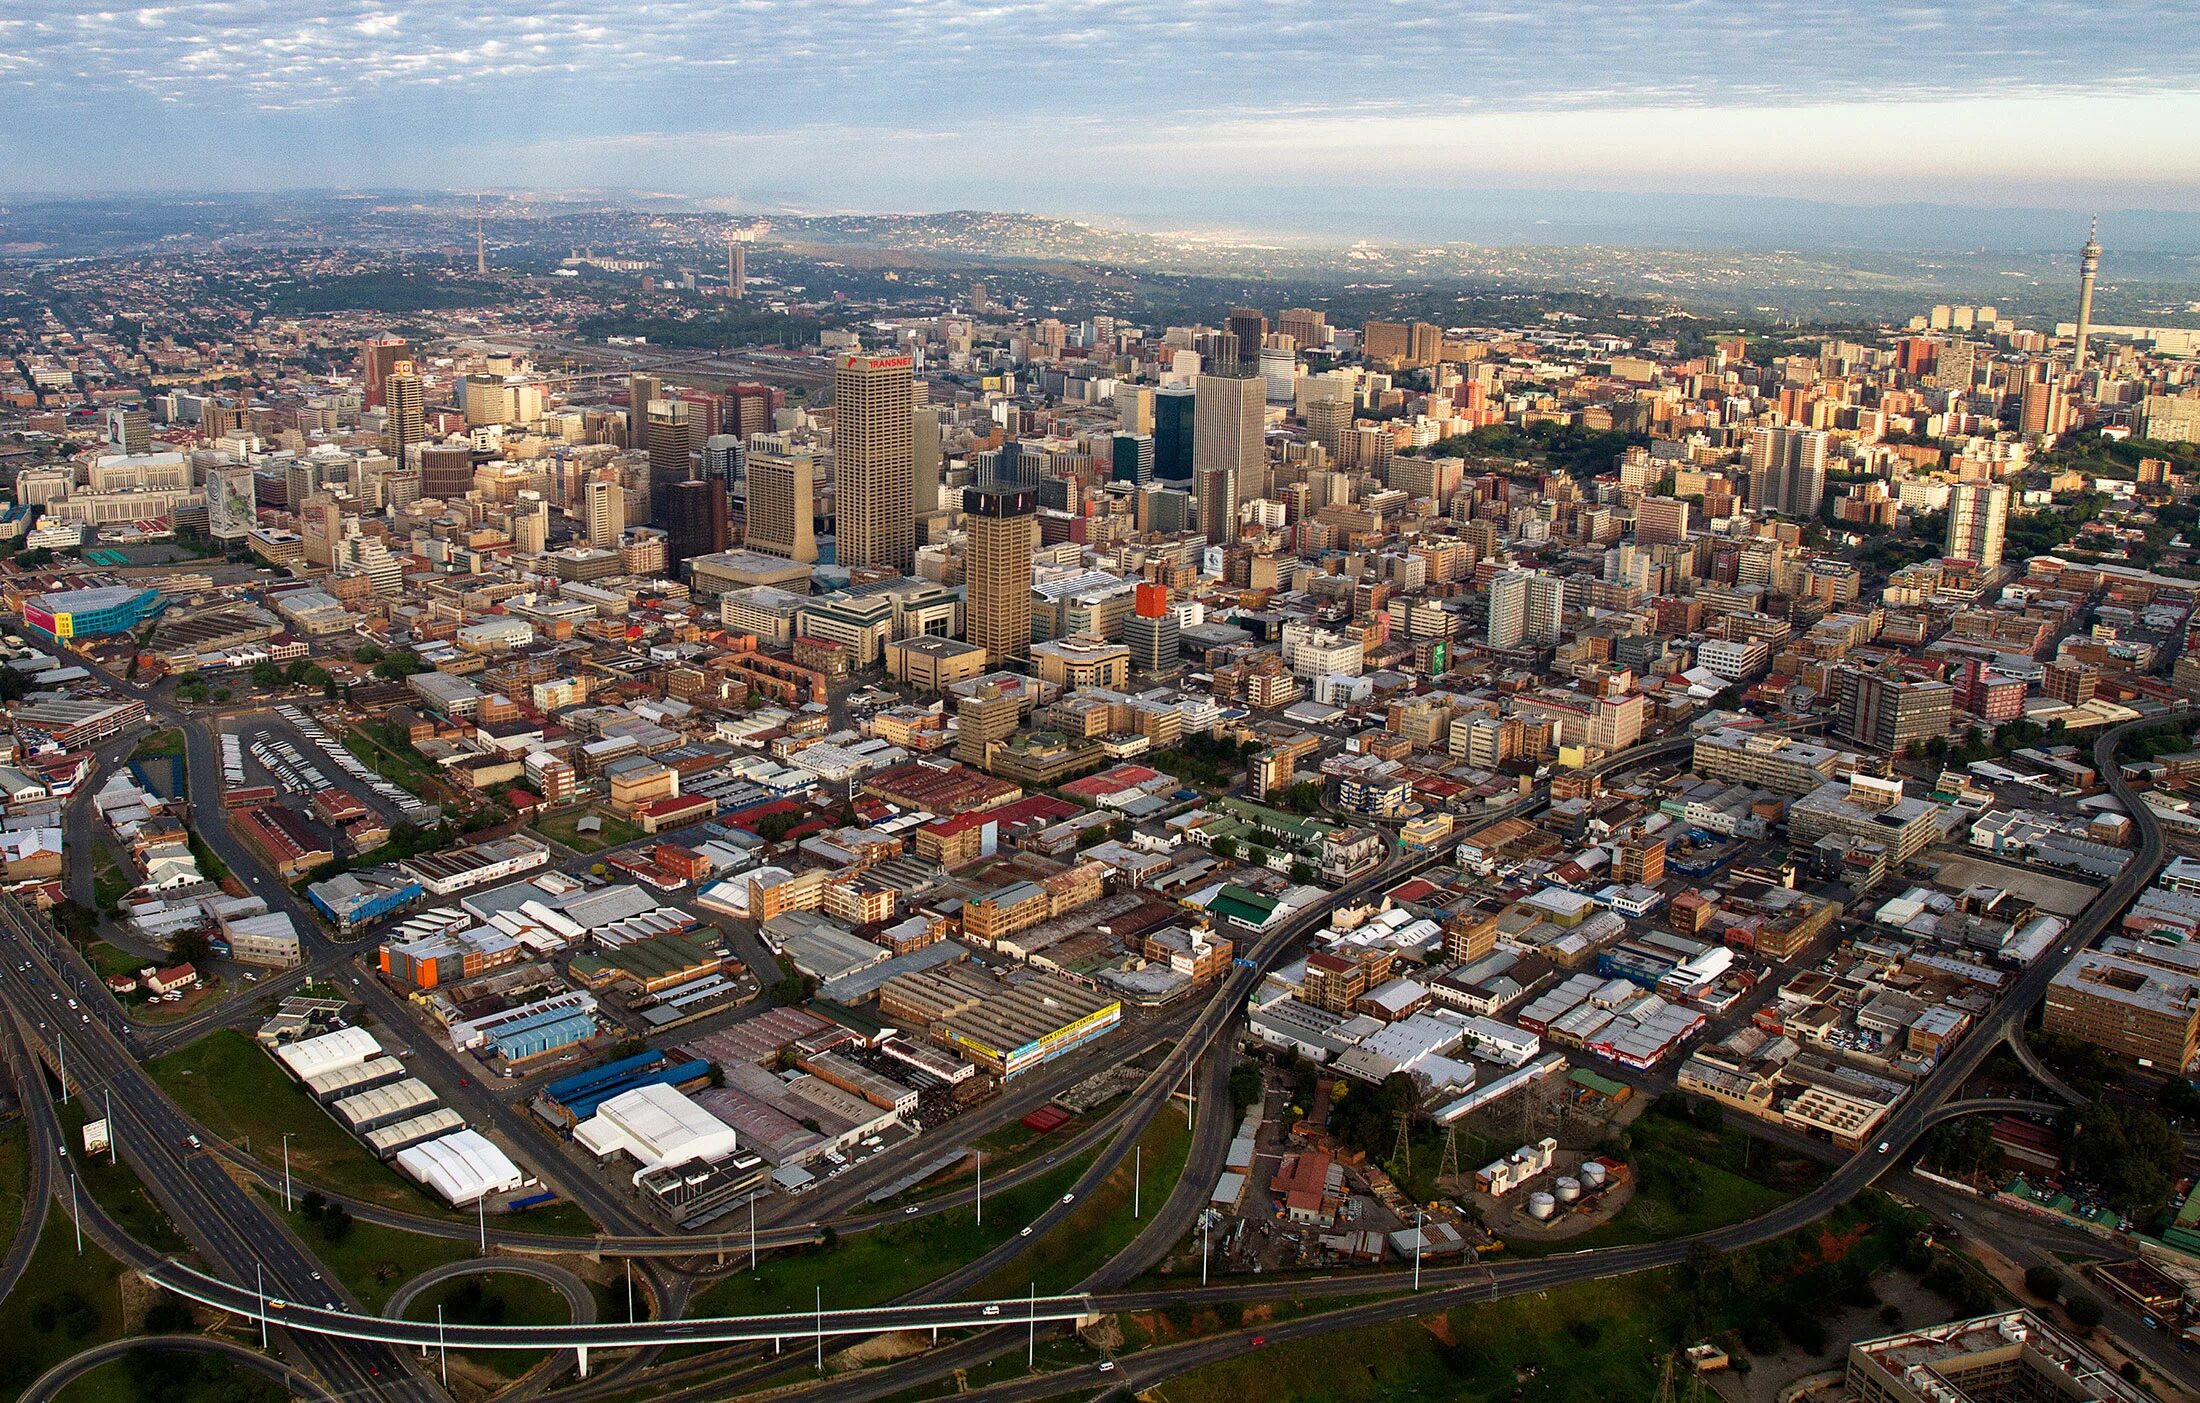 Africa city. ЮАР Йоханнесбург. Южная Африка Йоханнесбург. ЮАР столица Йоханнесбург. Южно Африканская Республика Йоханнесбург.